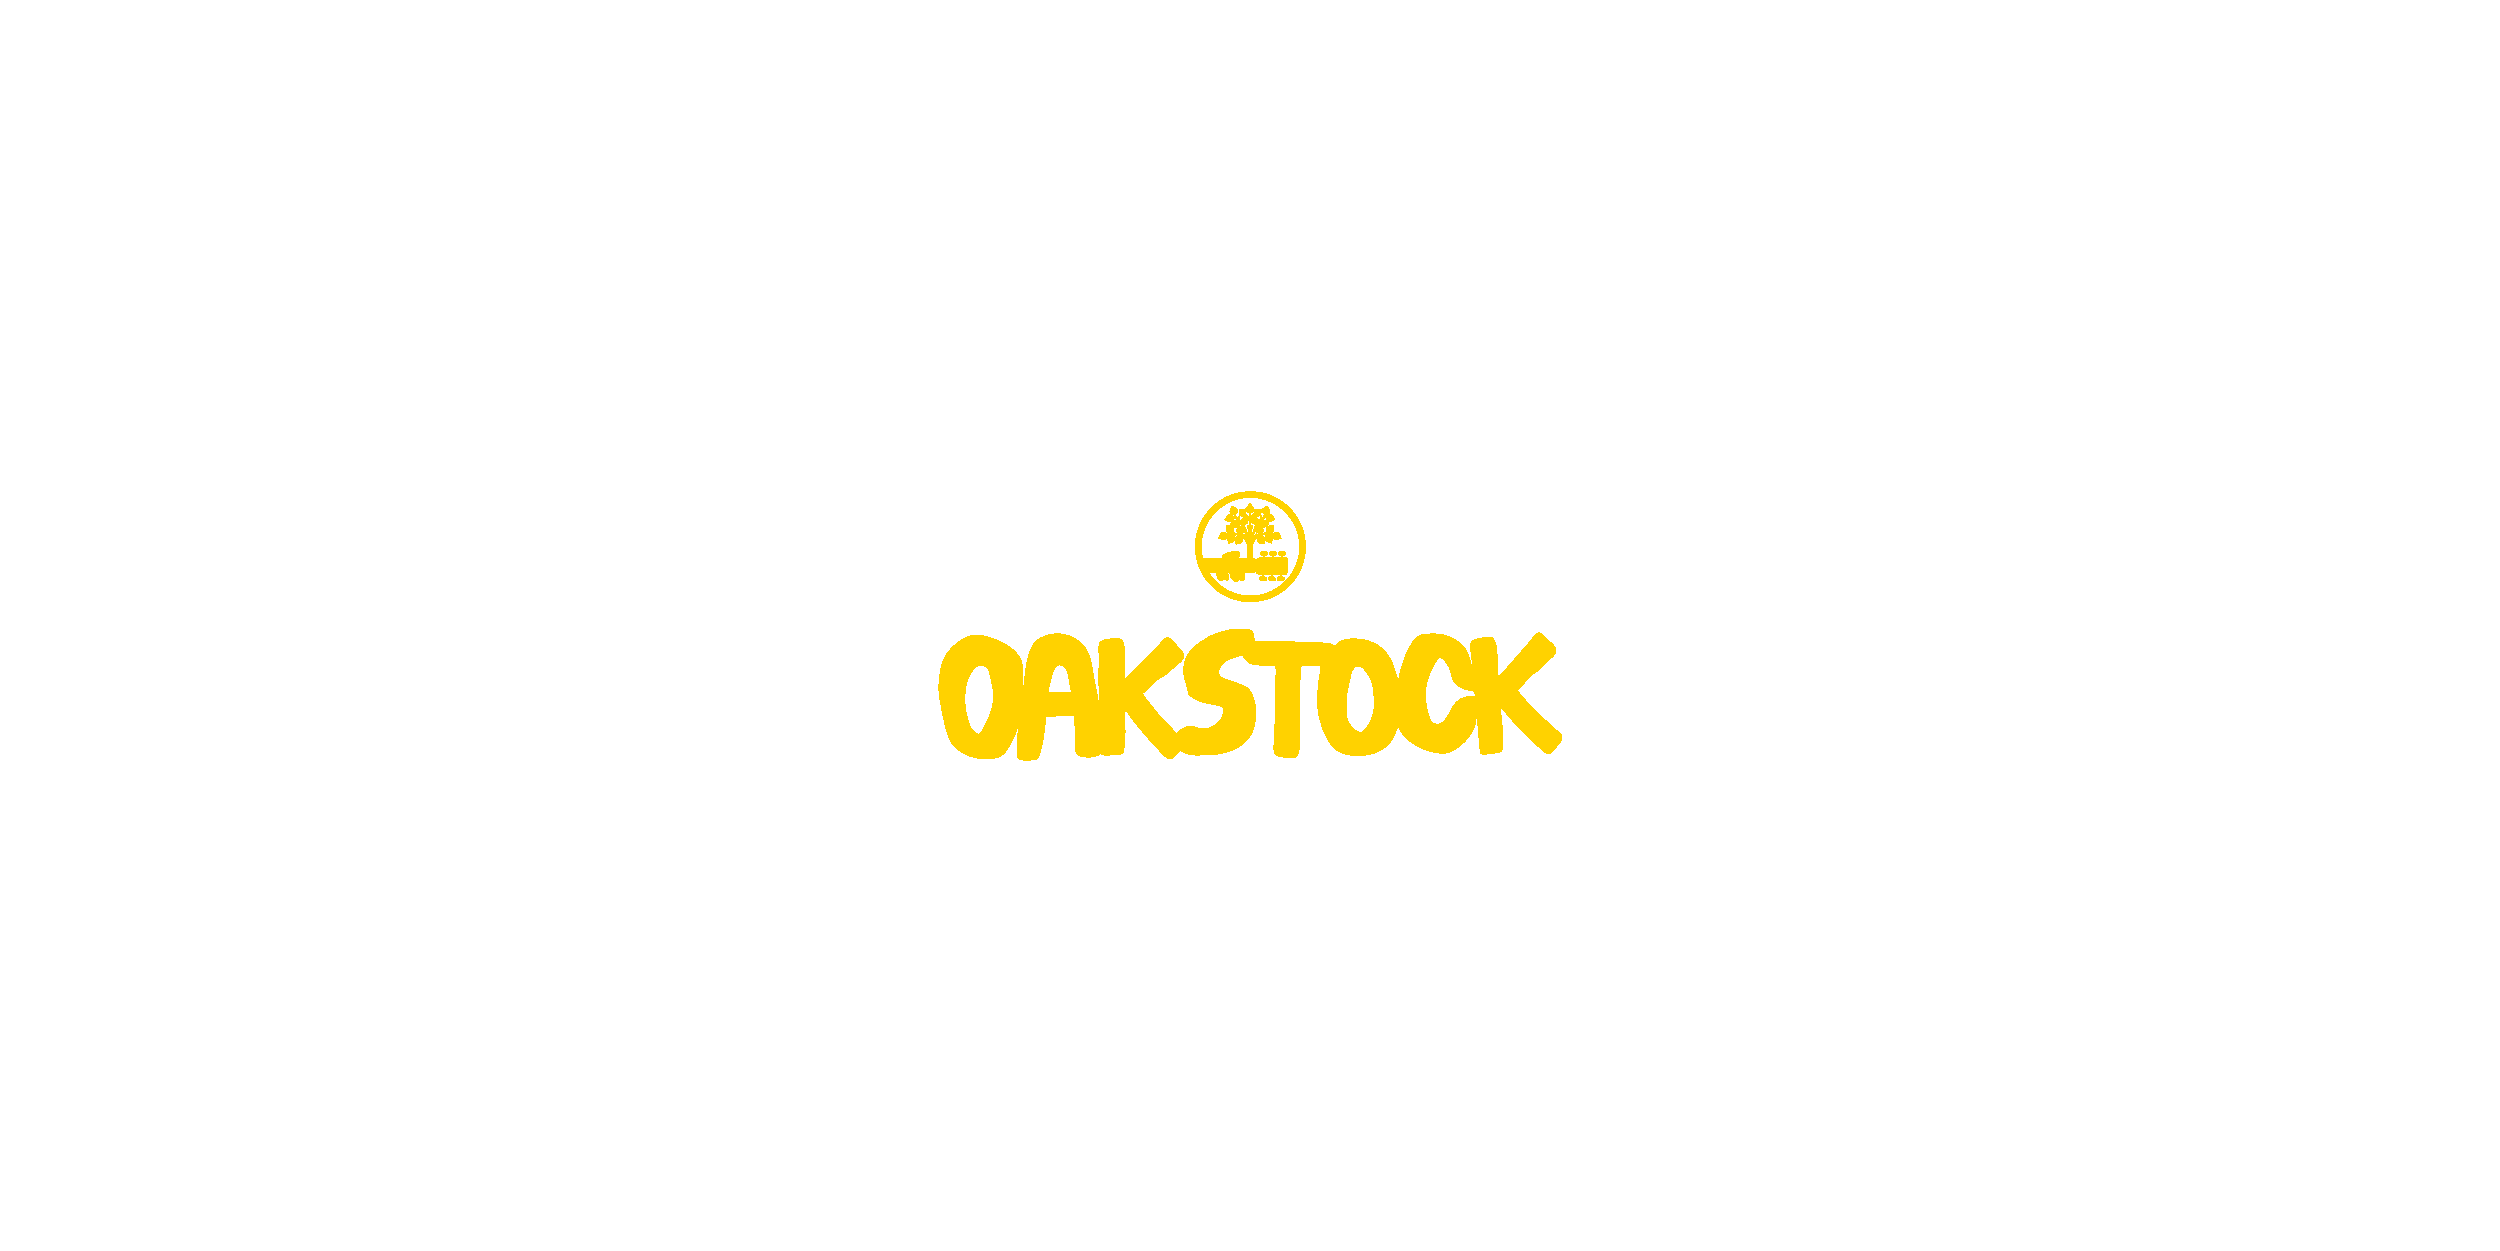 Oakstock Web Banner v6